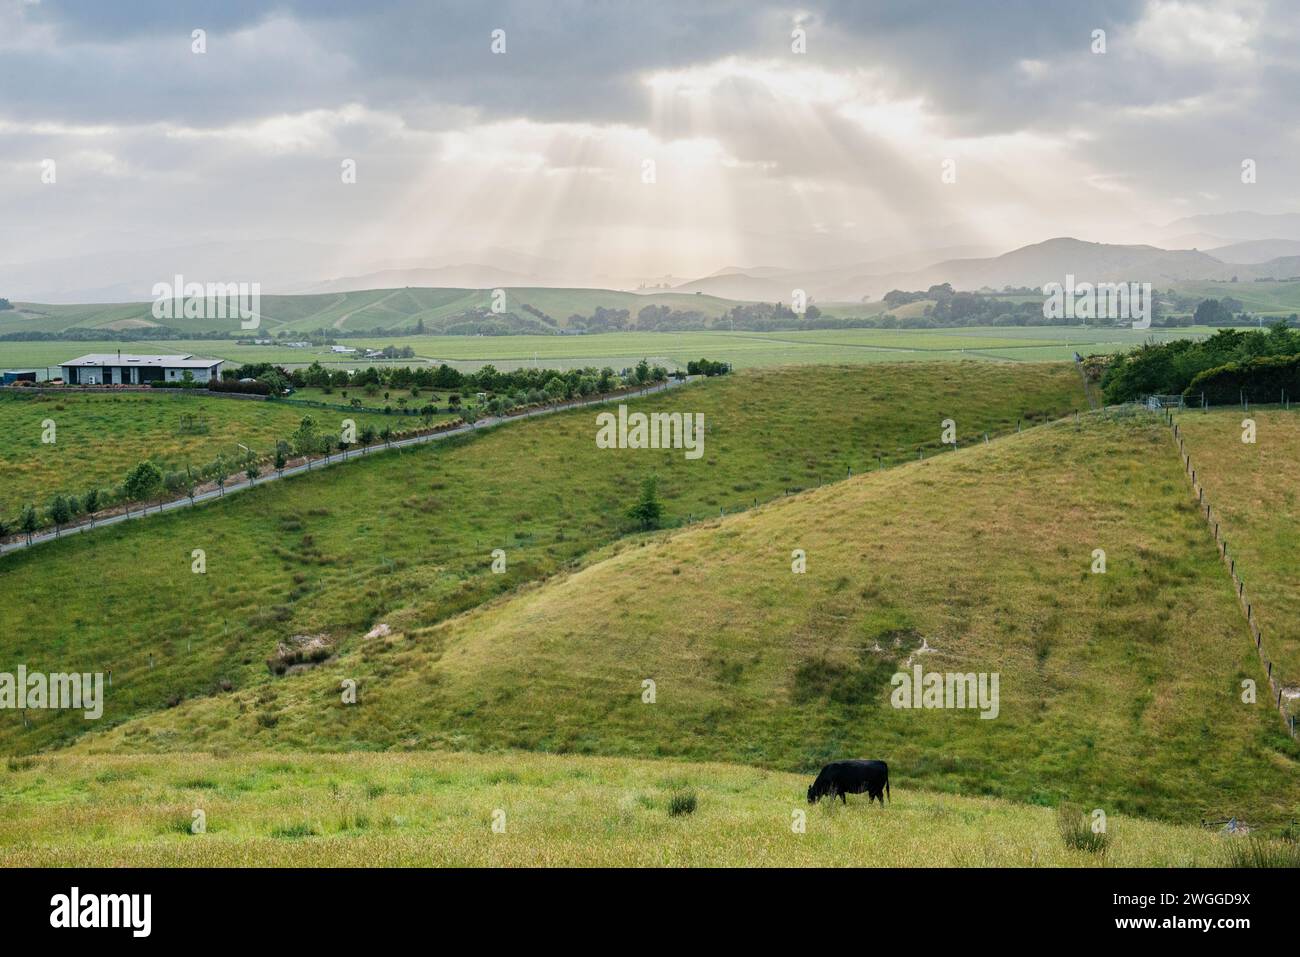 Vineyards and grazing lands near Blenheim in the Marlborough region of New Zealand Stock Photo